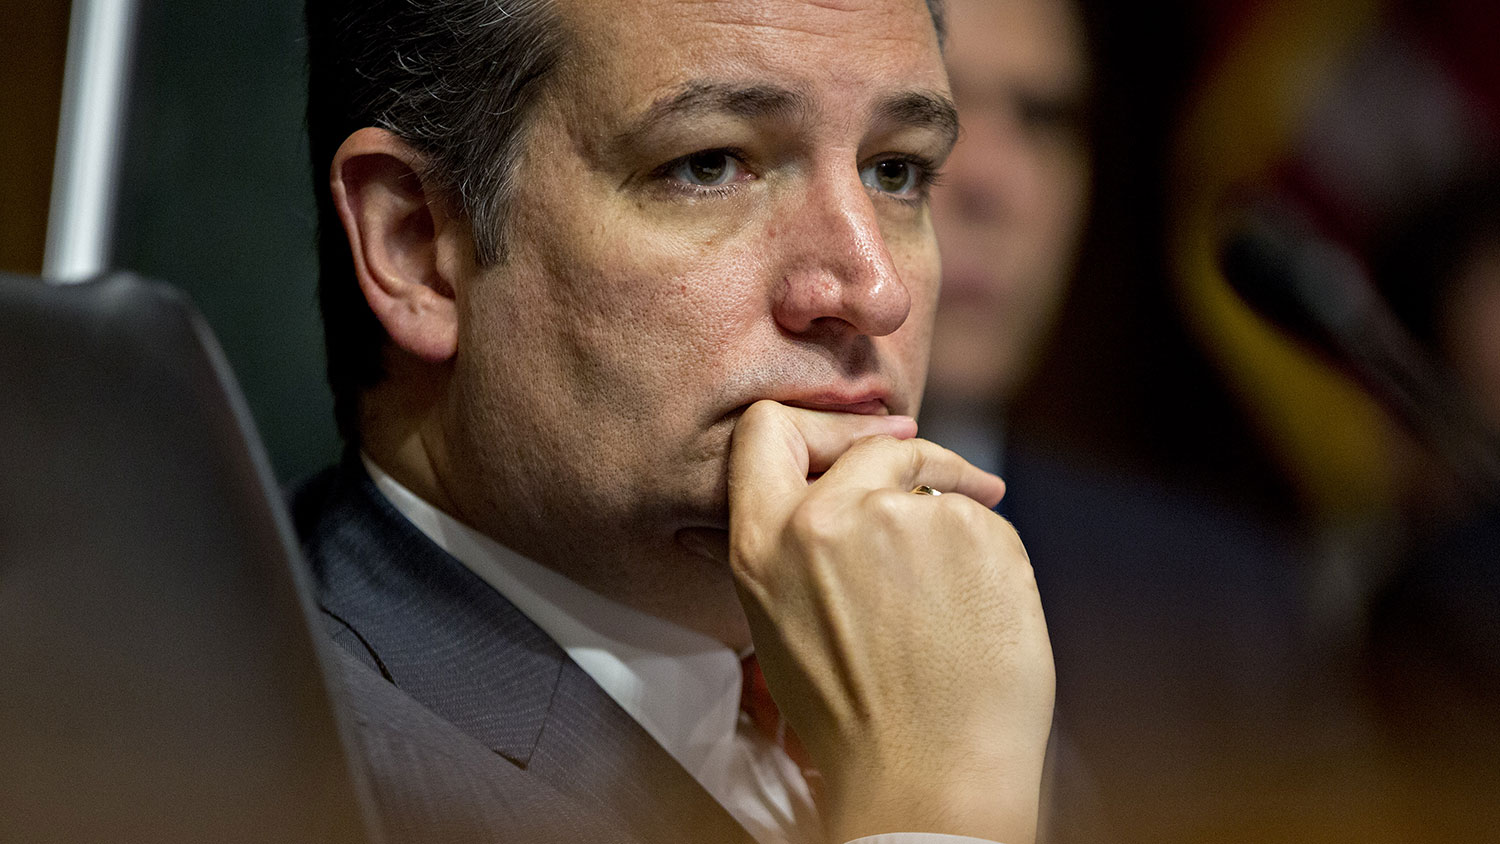 Senator Ted Cruz listens during a Senate Judiciary Committee hearing in Washington on June 30, 2016.
